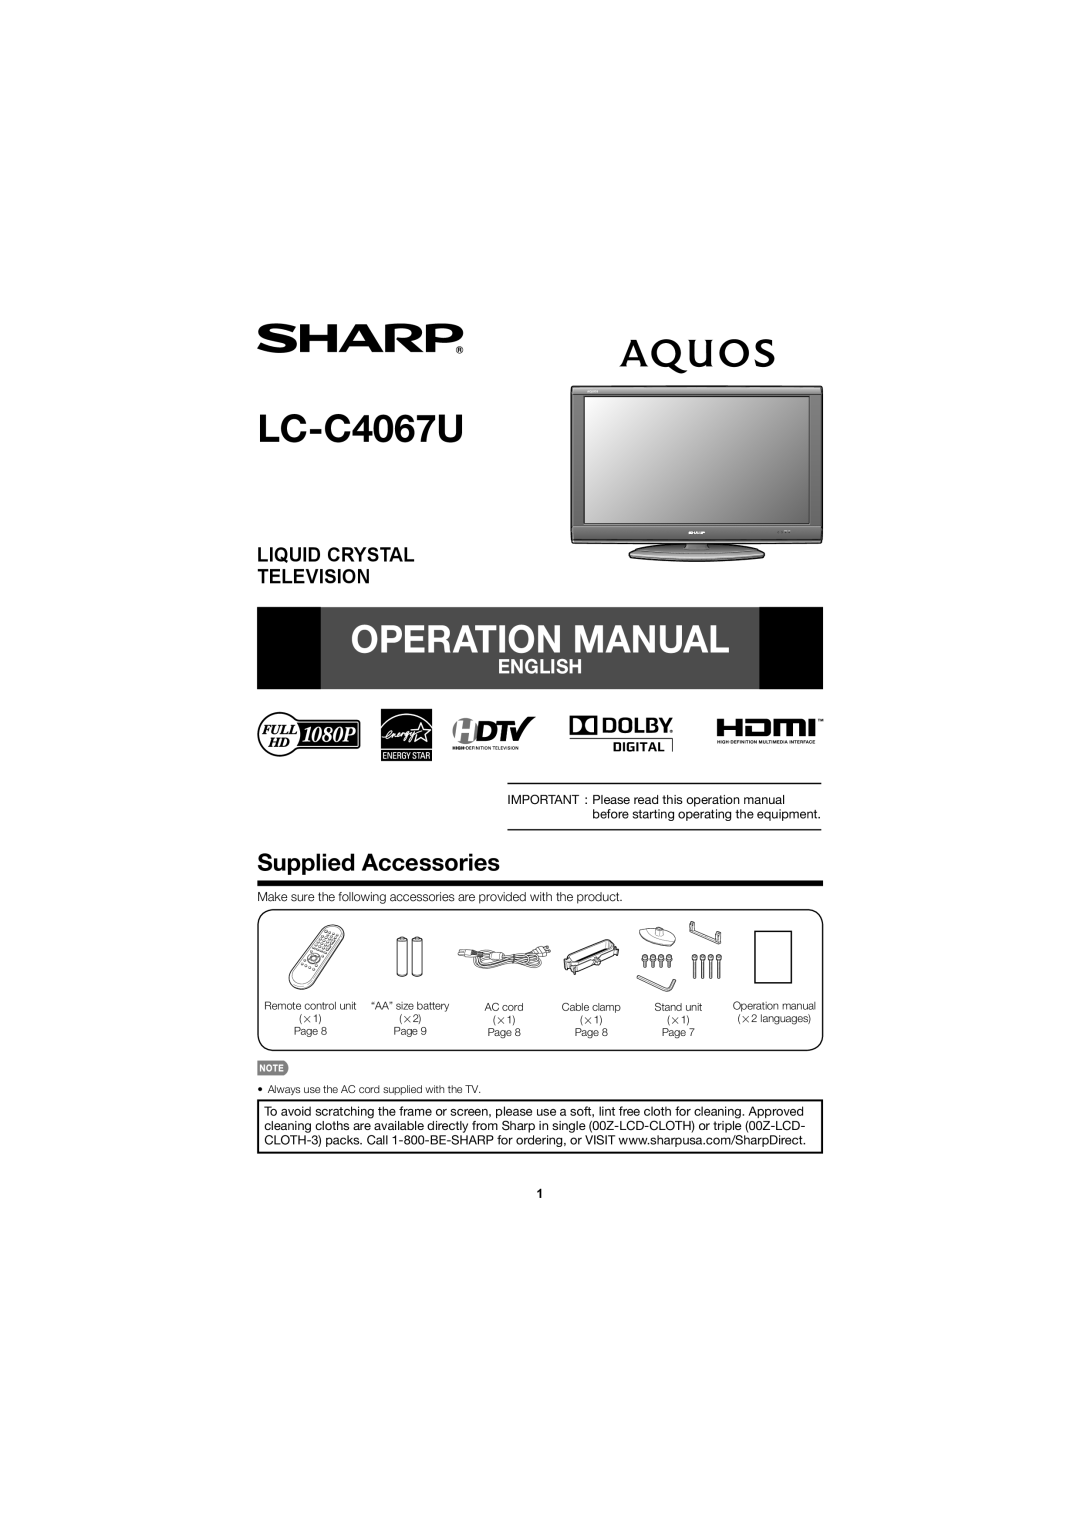 Sharp LC C4067U operation manual LC-C4067U, Supplied Accessories, Liquid Crystal Television, English 